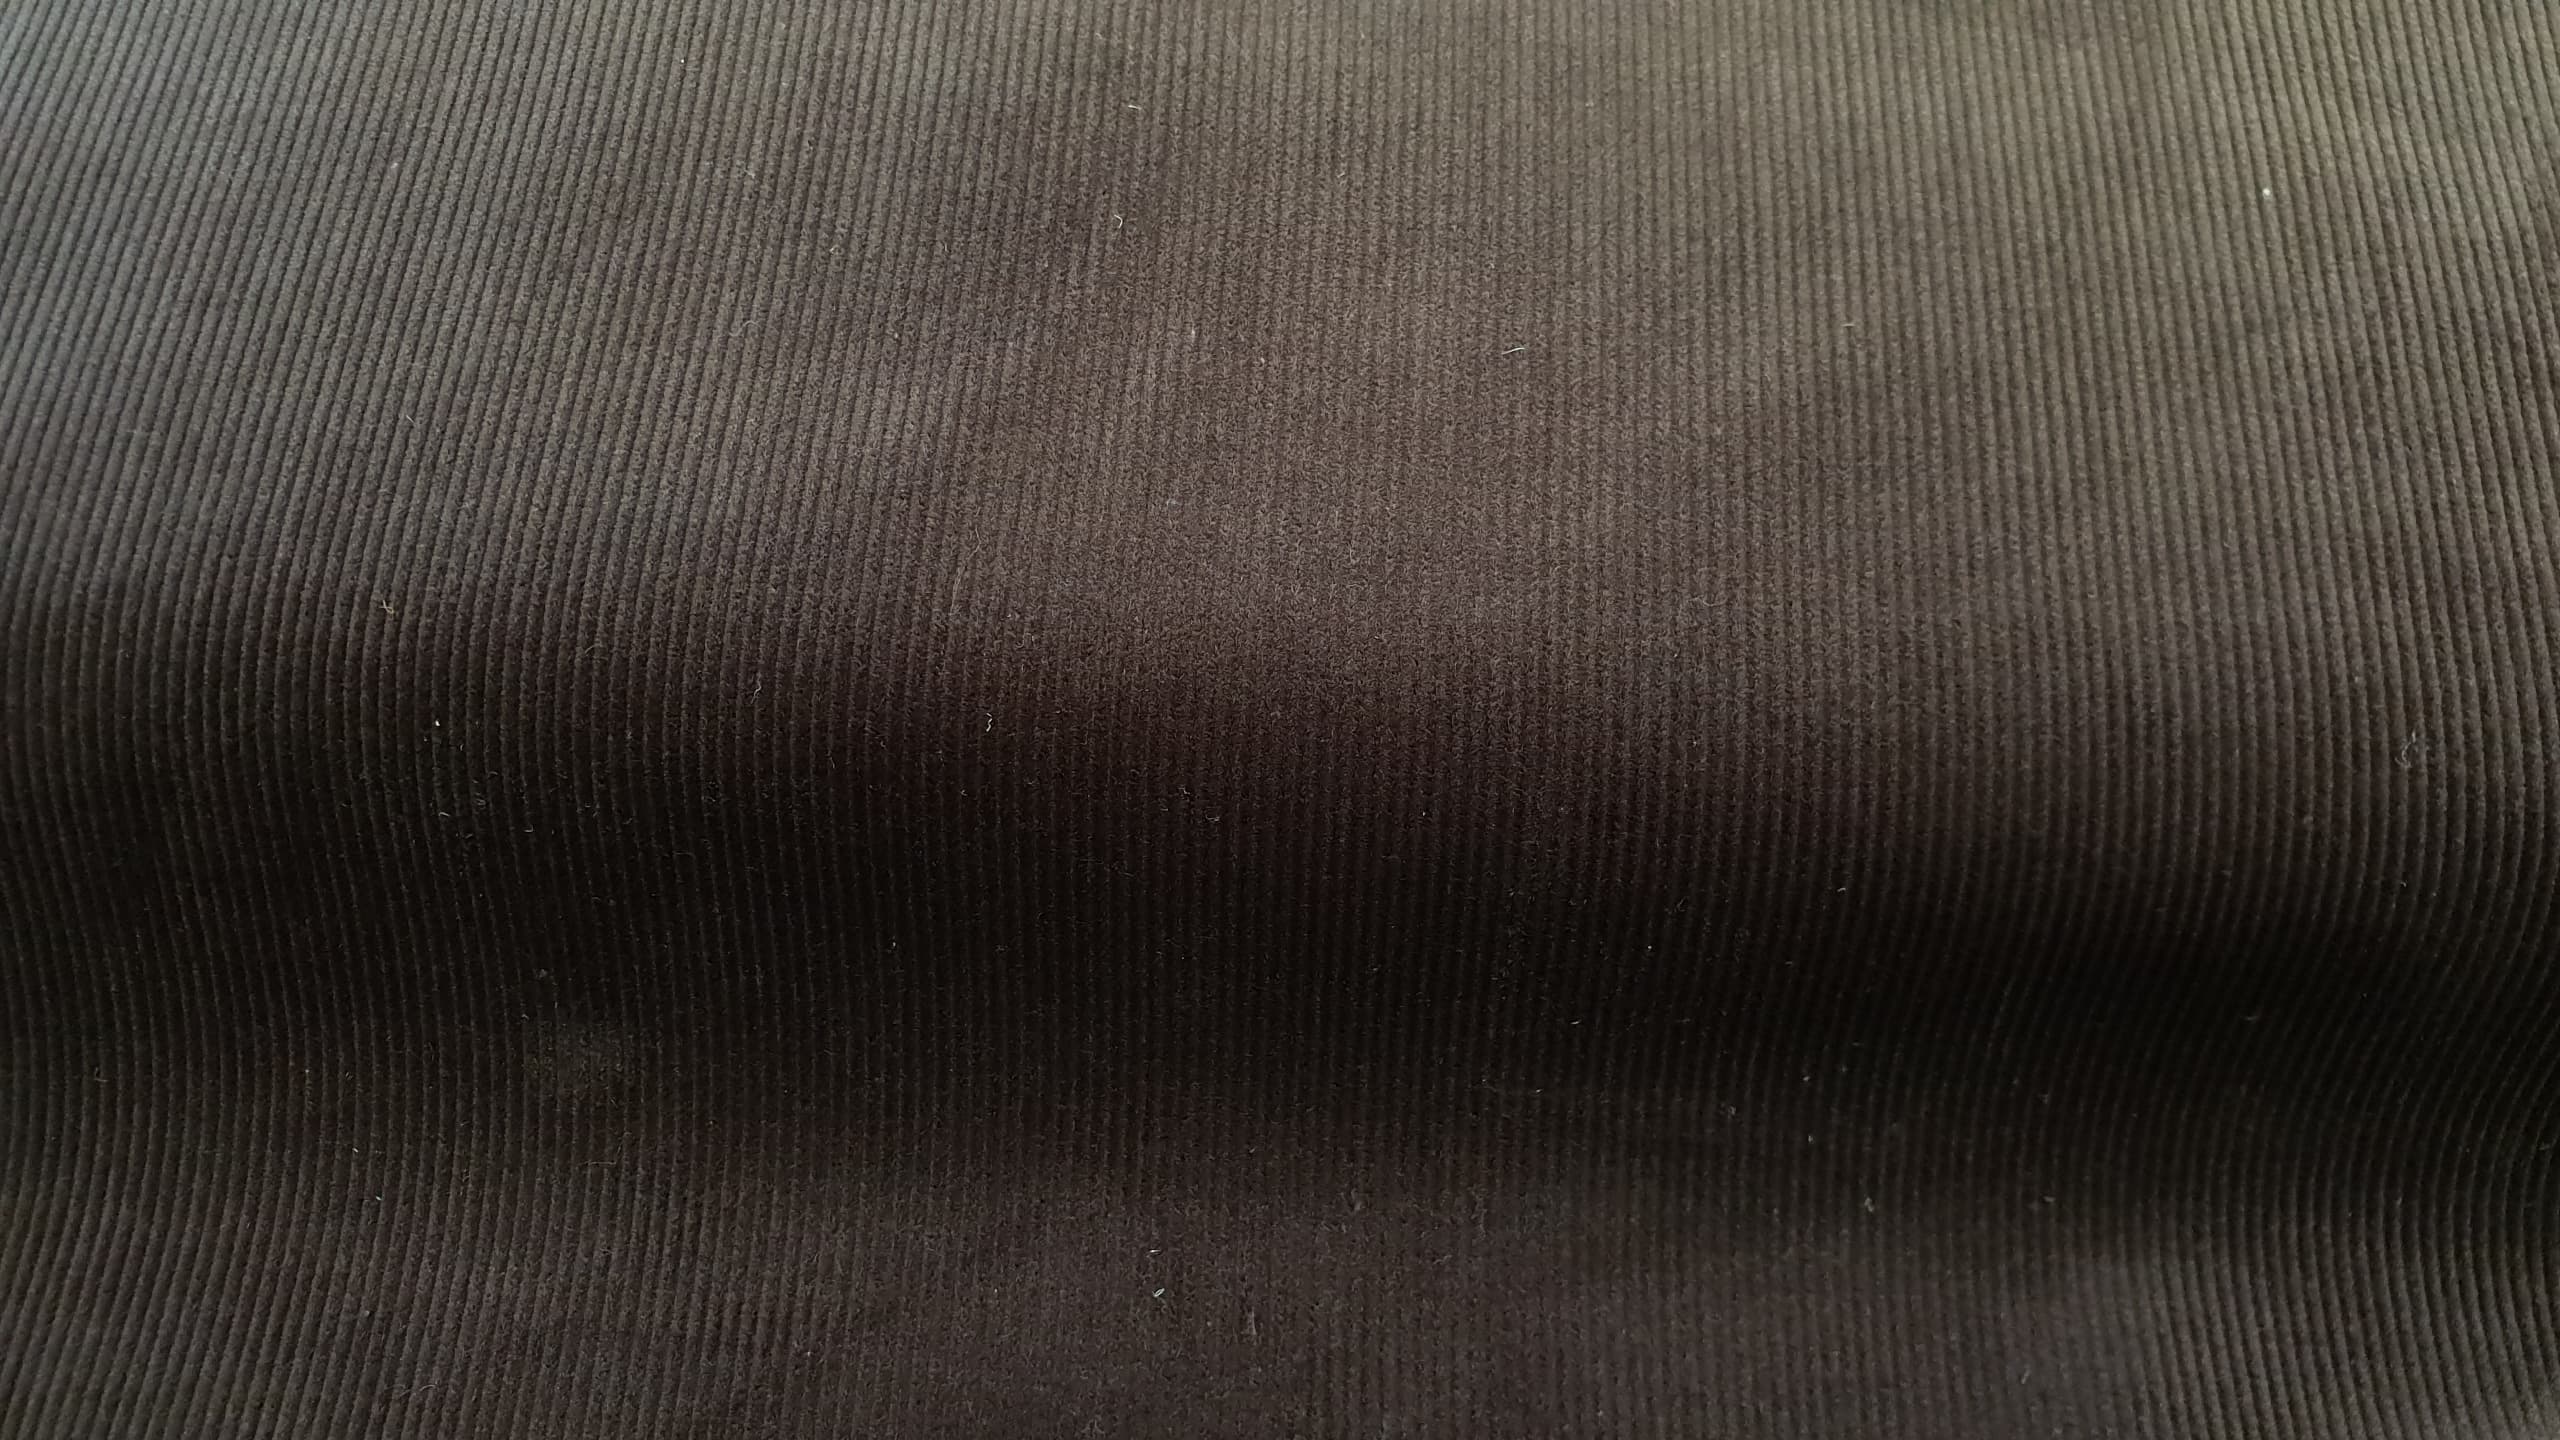 Fabric swatch- Corduroy